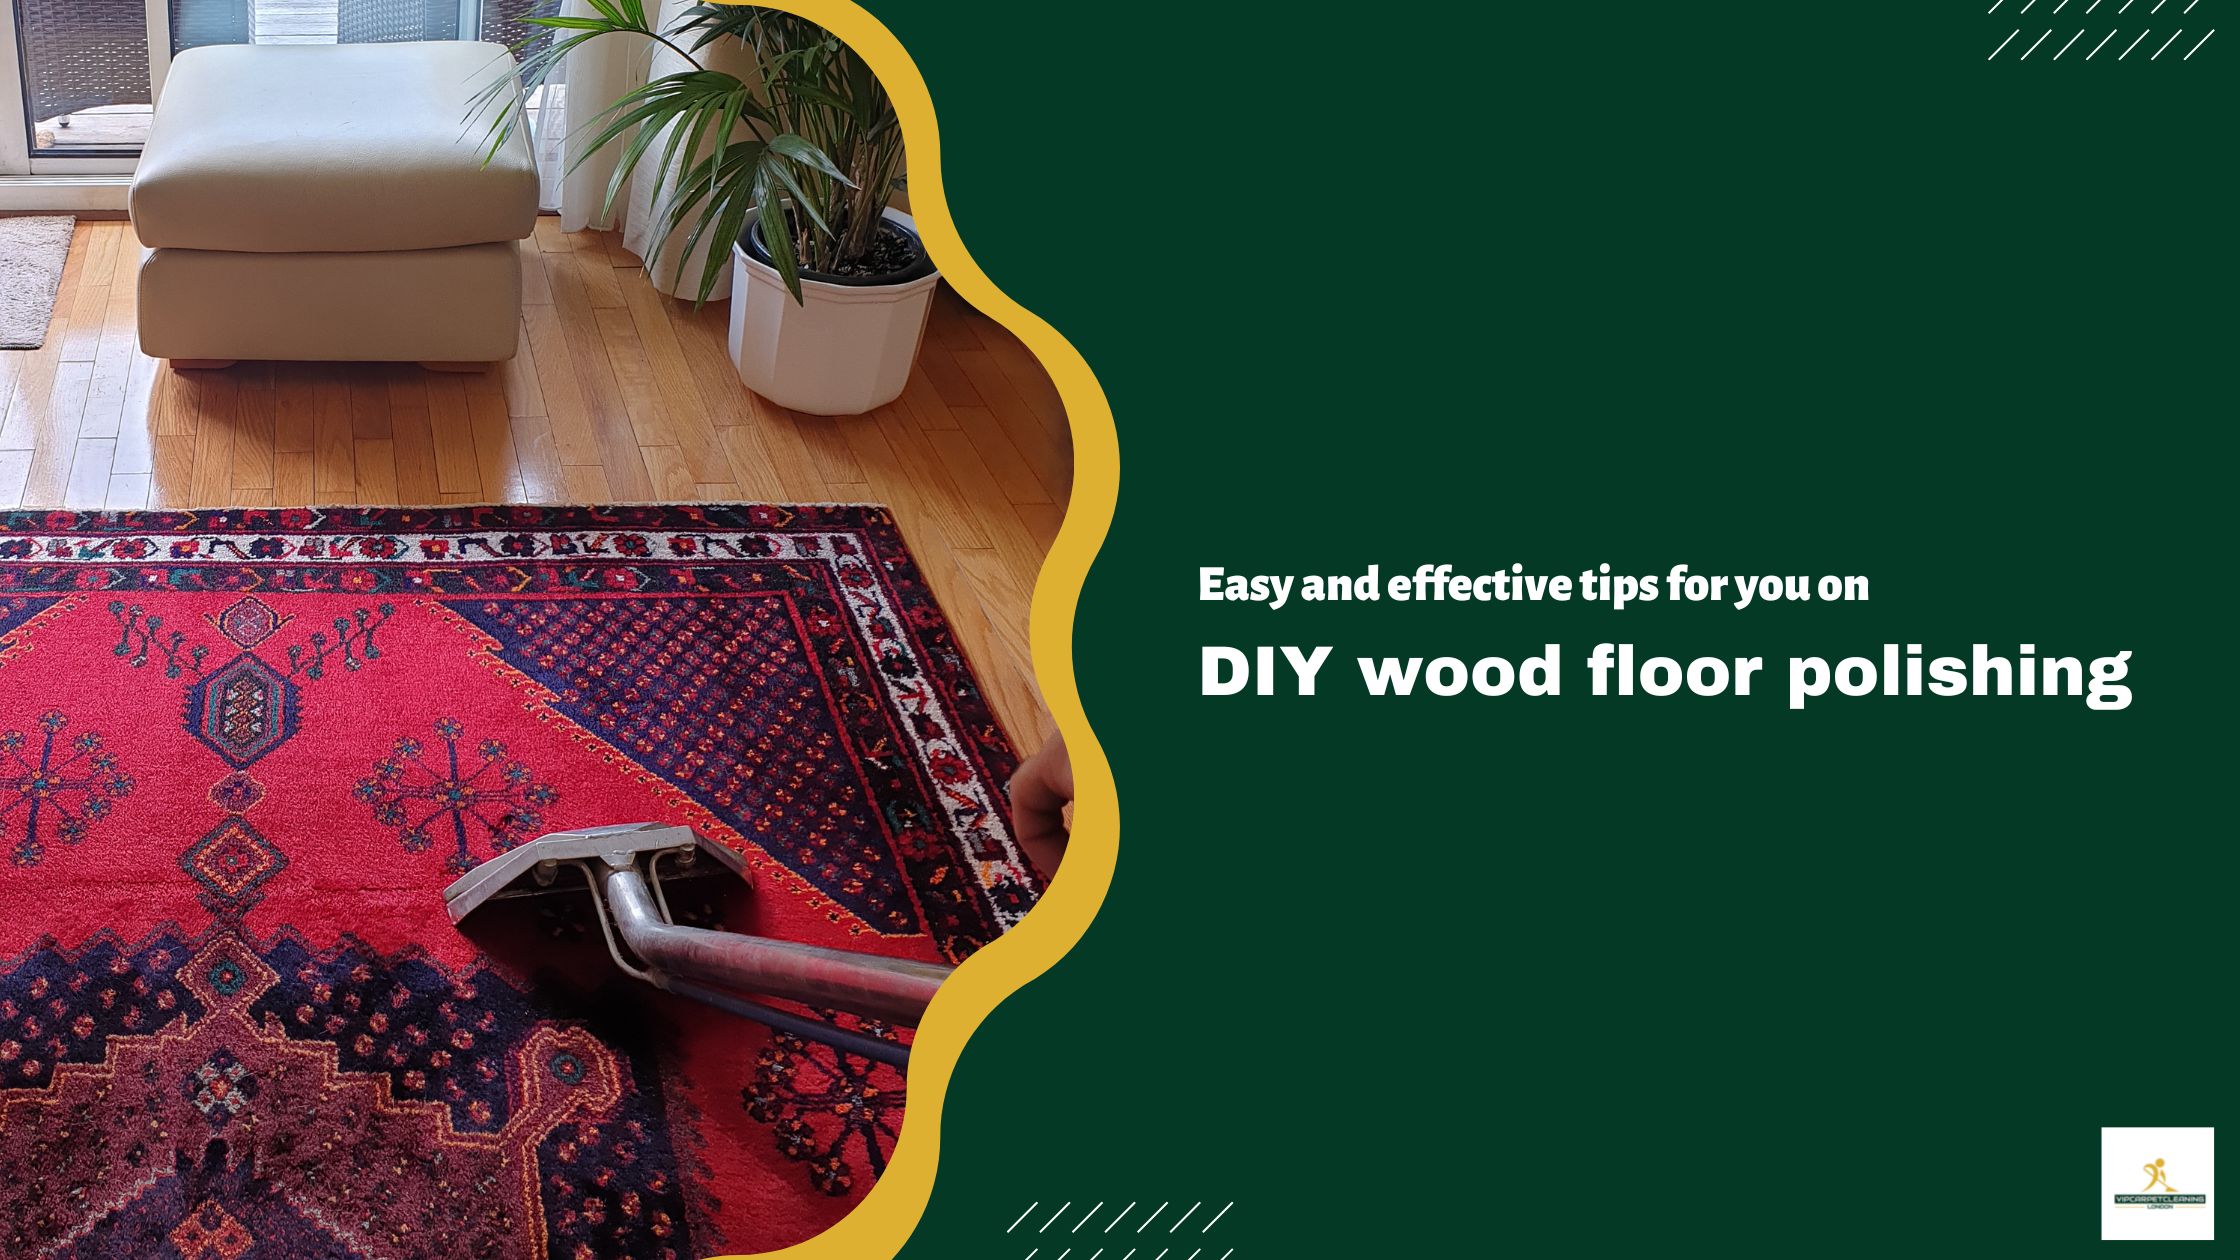 Easy and effective tips for you on DIY wood floor polishing